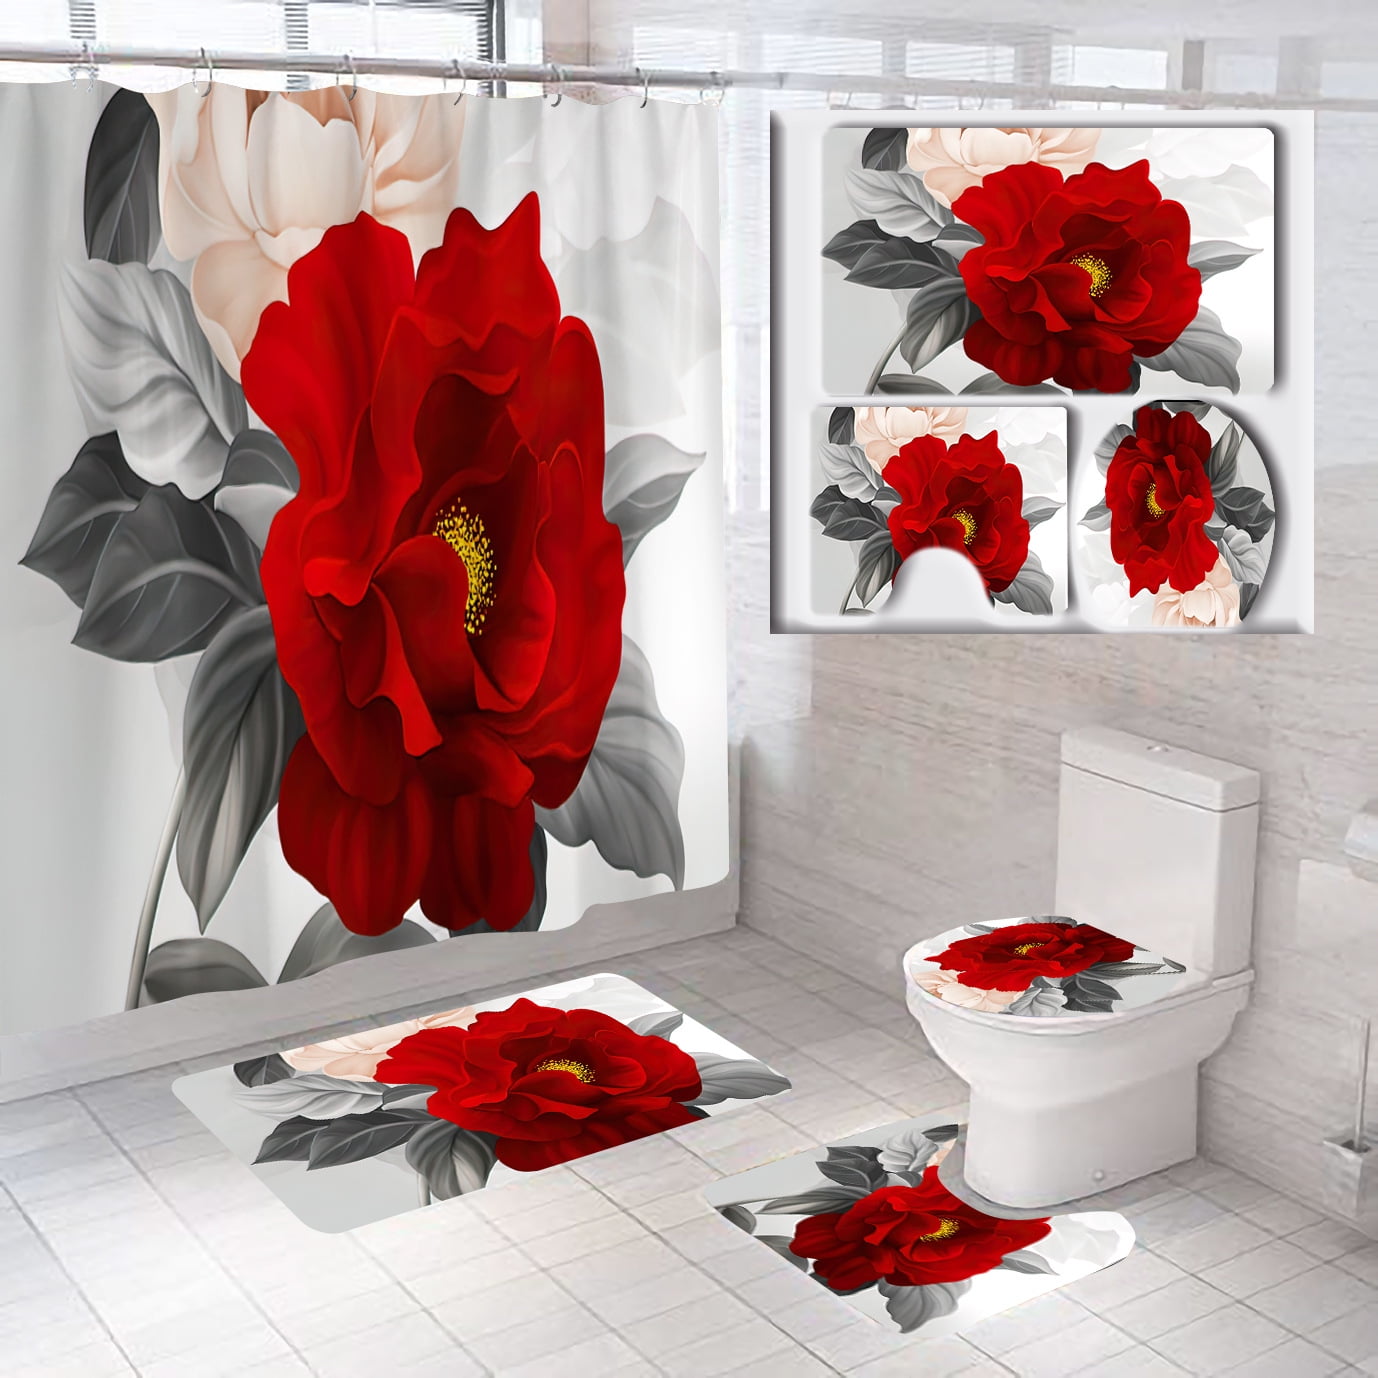 Flower Shower Curtain Bath Mat Toilet Cover Rug Home Bathroom Decor 